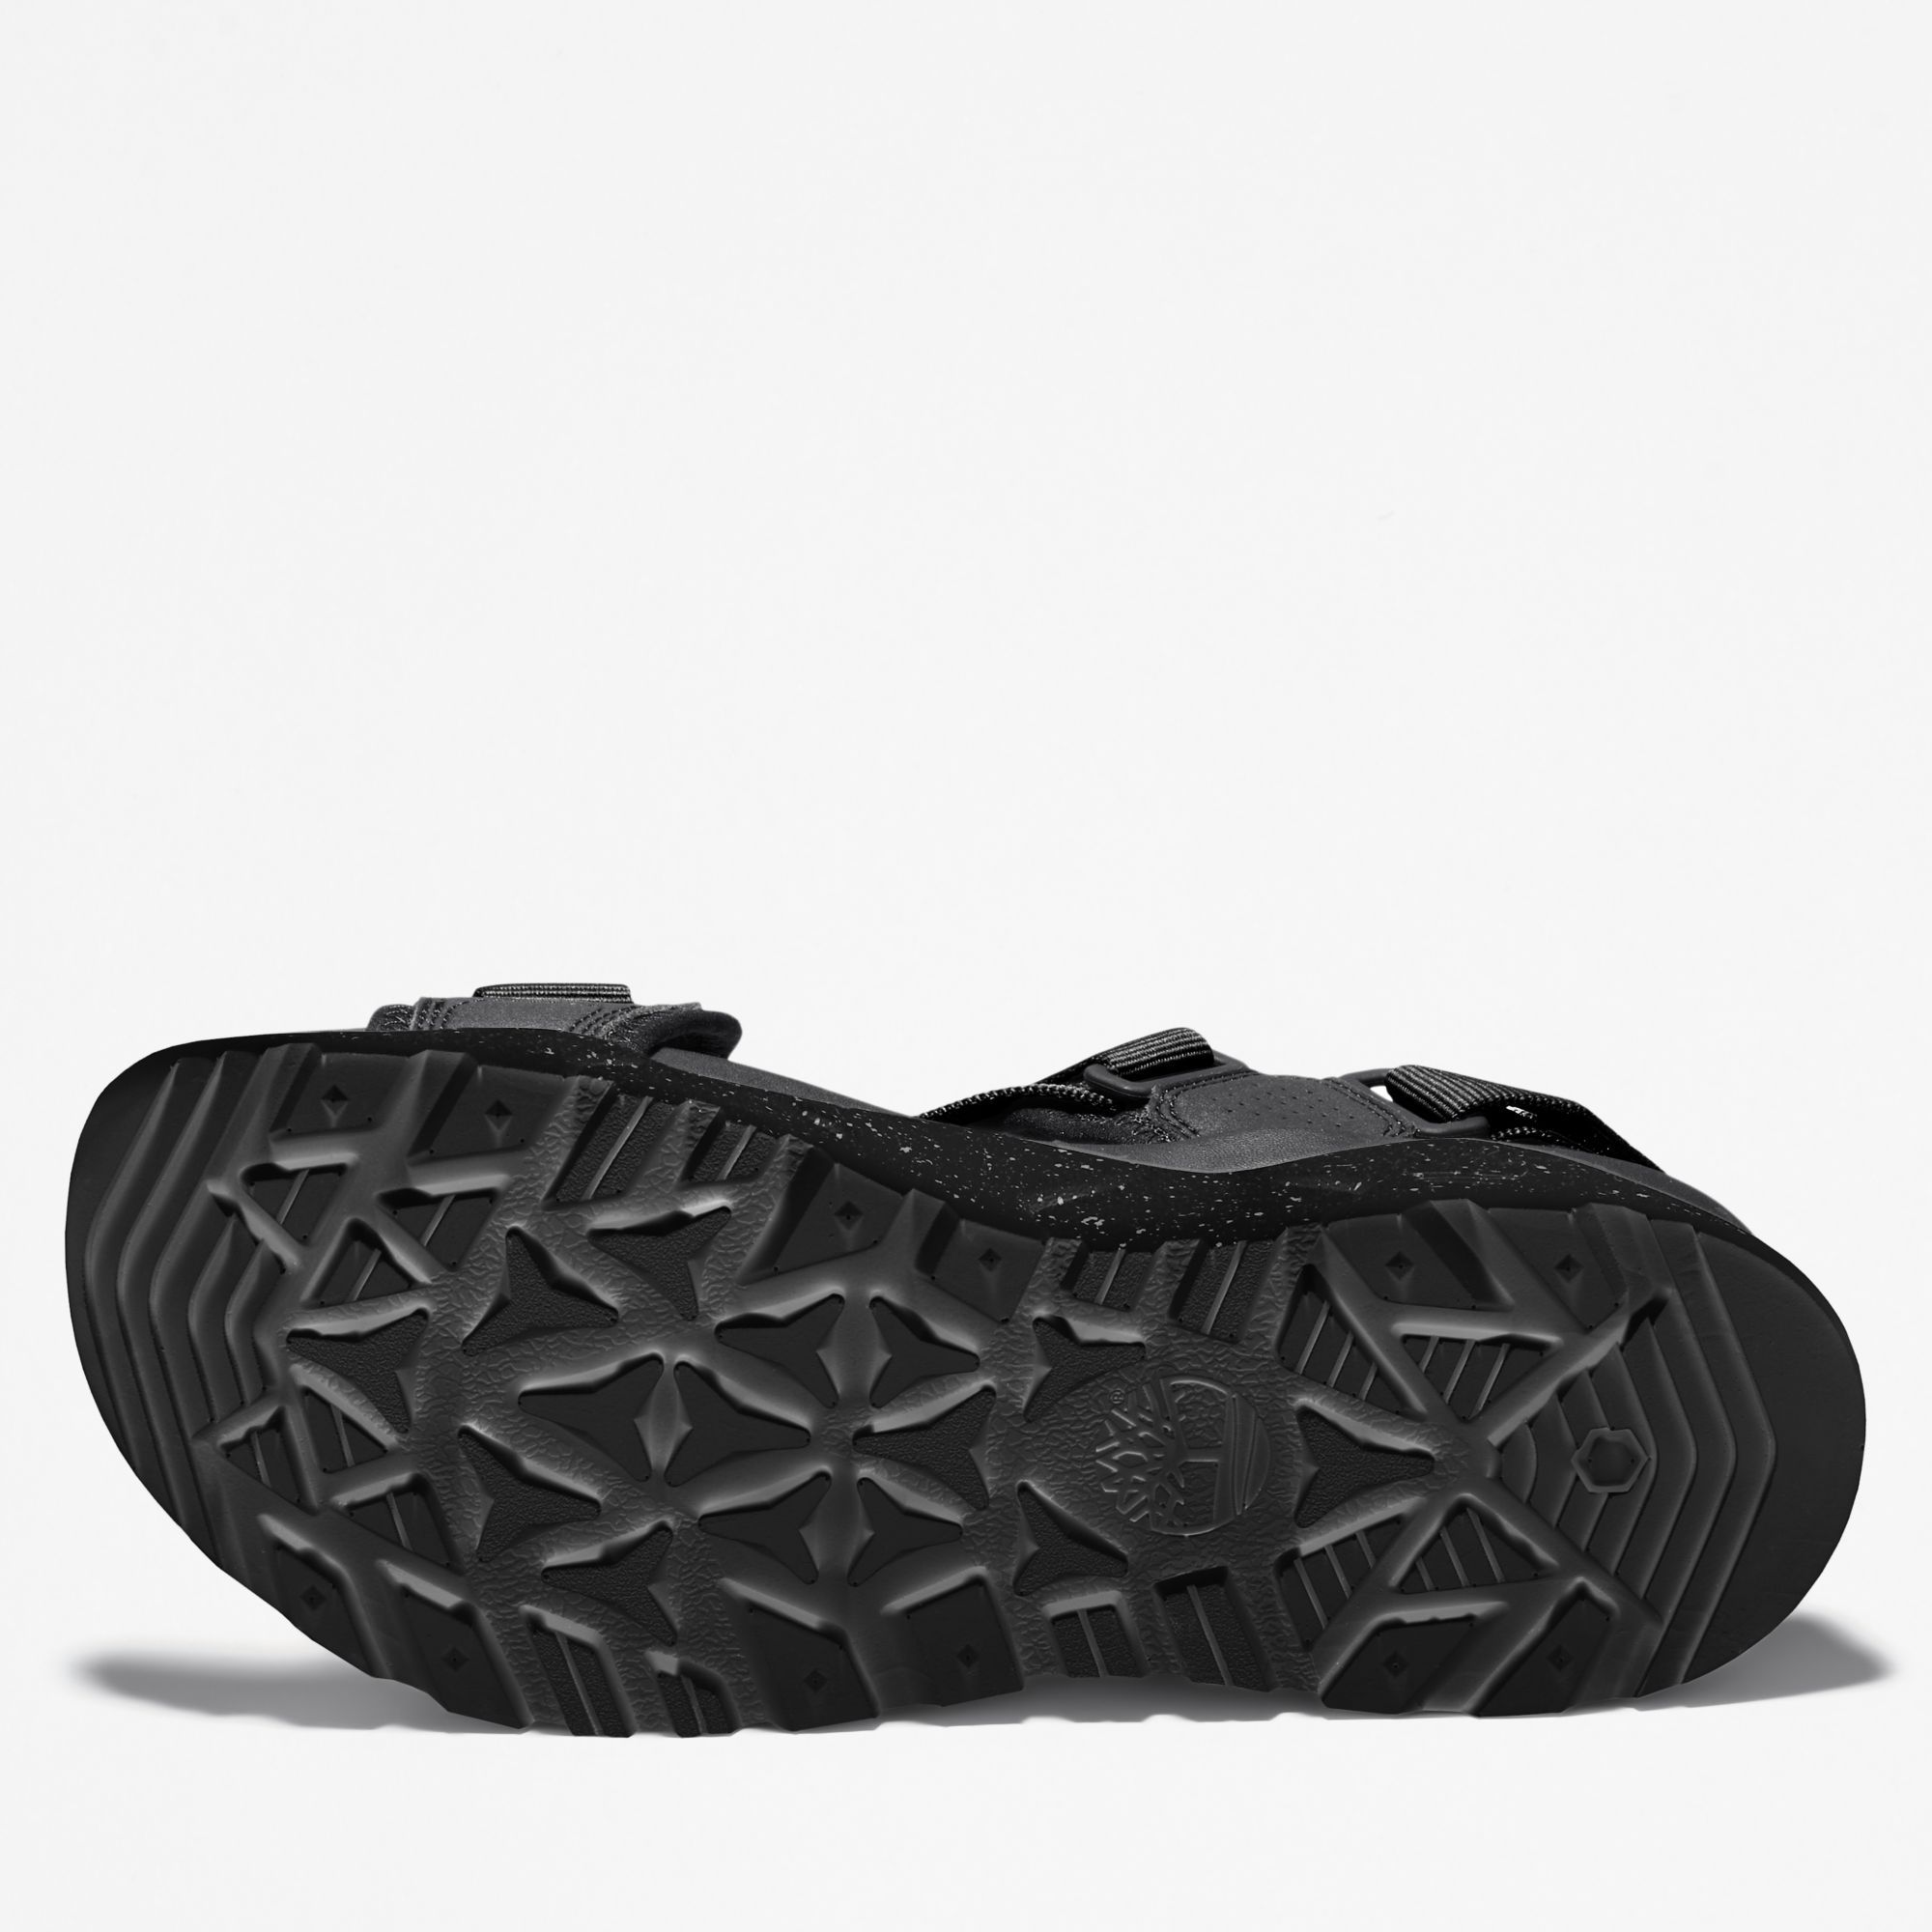  Timberland Ripcord Sandals - Black/Black 